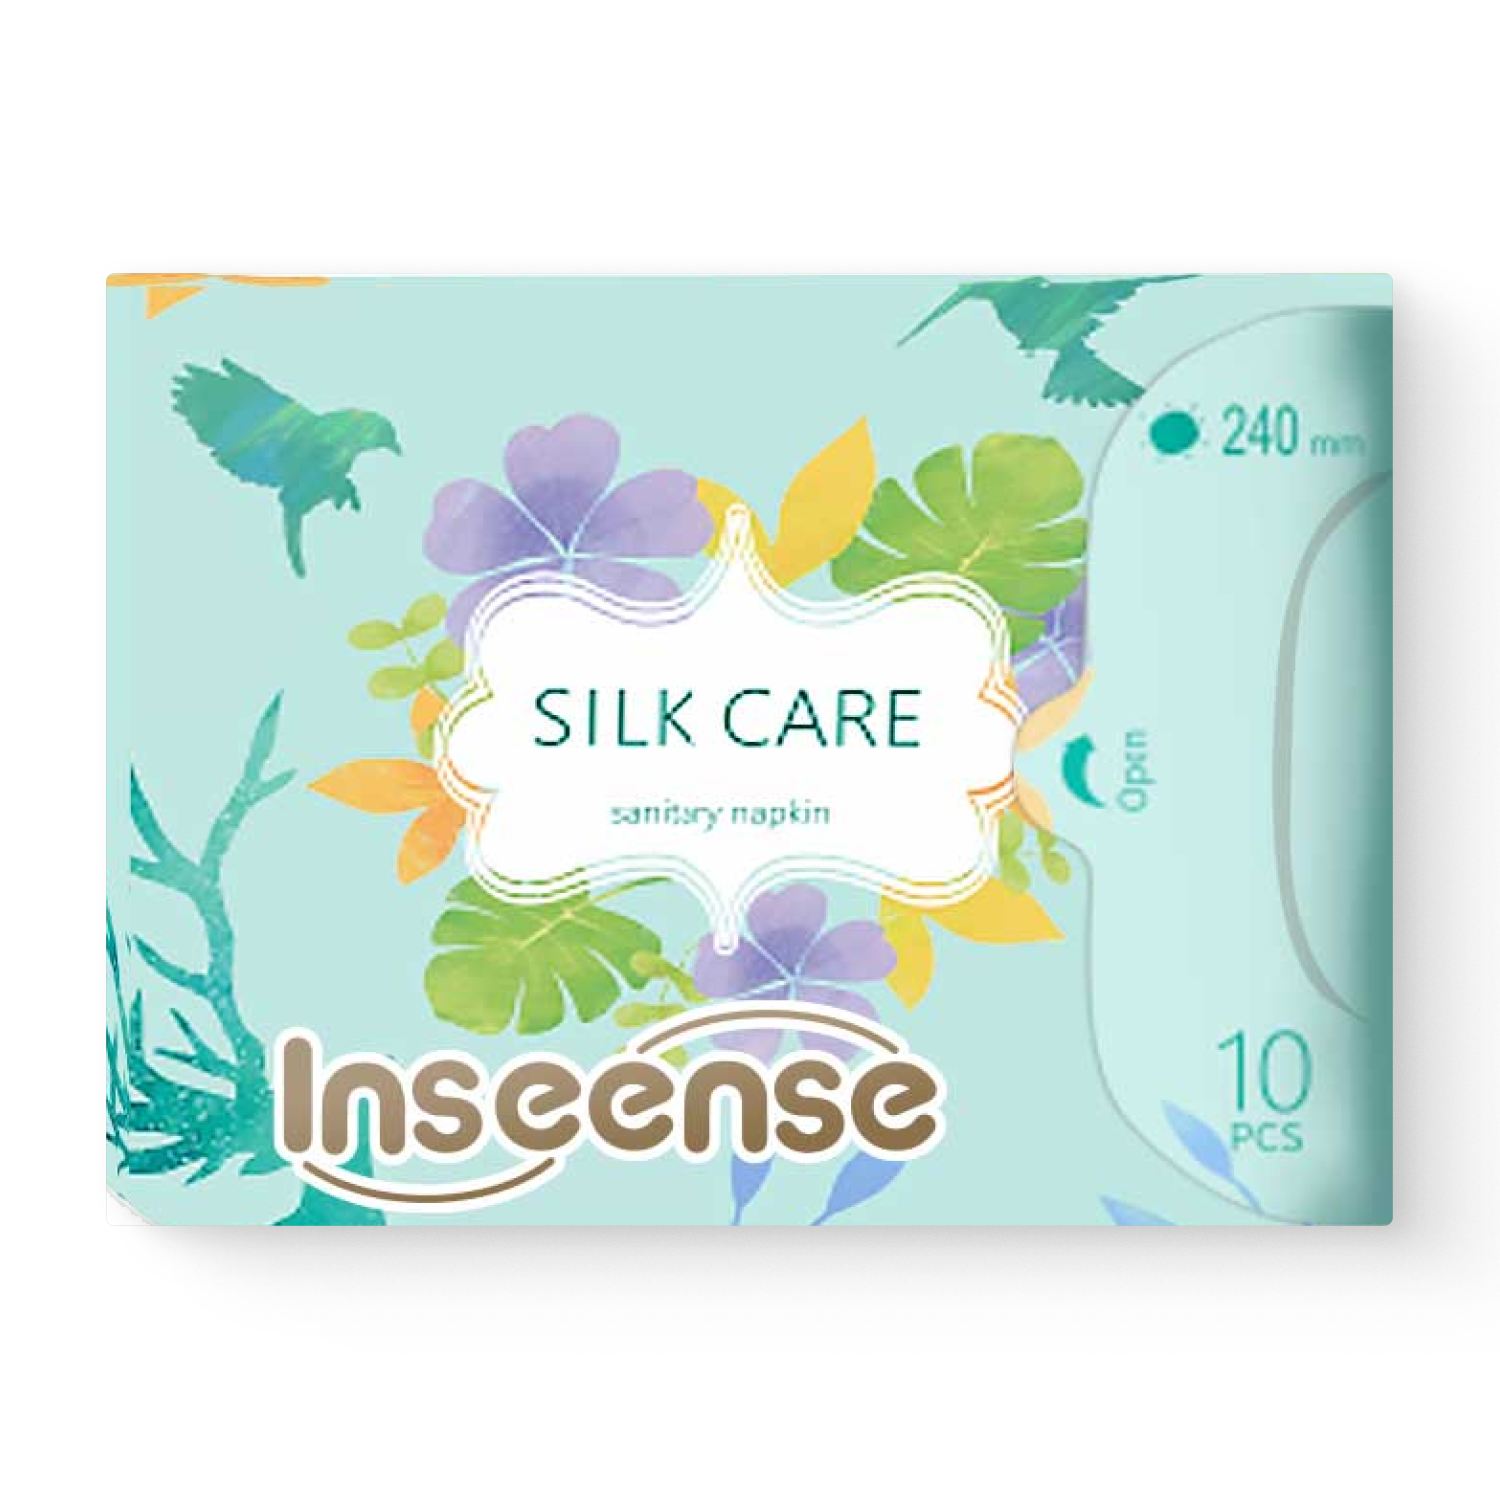 Прокладки INSEENSE Silk Care женские гигиенические дневные 4 капли 240 мм 10 шт. женские прокладки day spa queen cusion ultra silk soft normal 10шт